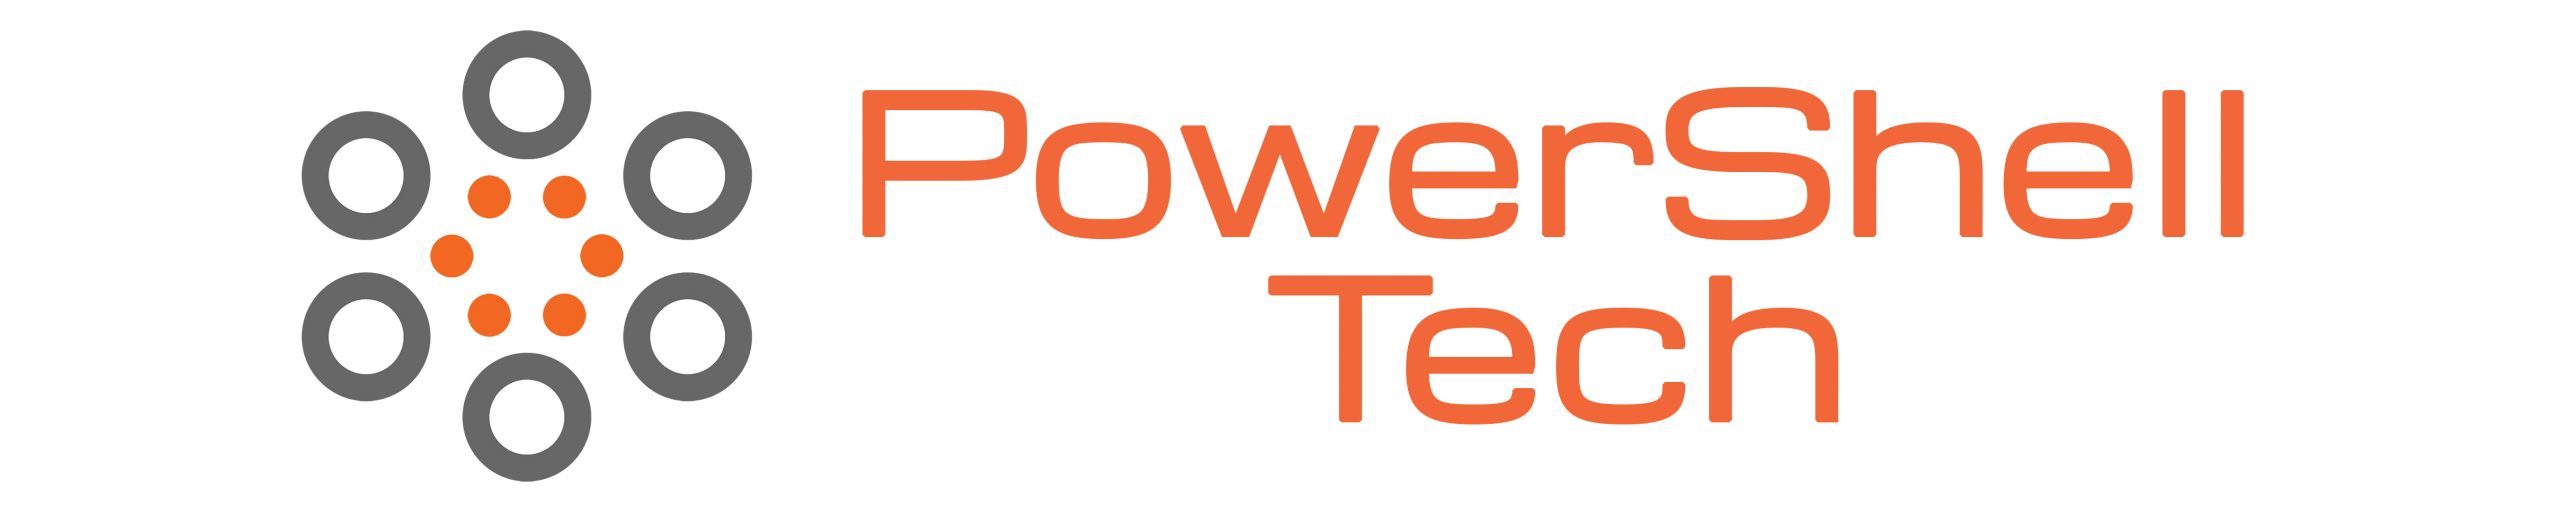 PowerShell Tech Limited